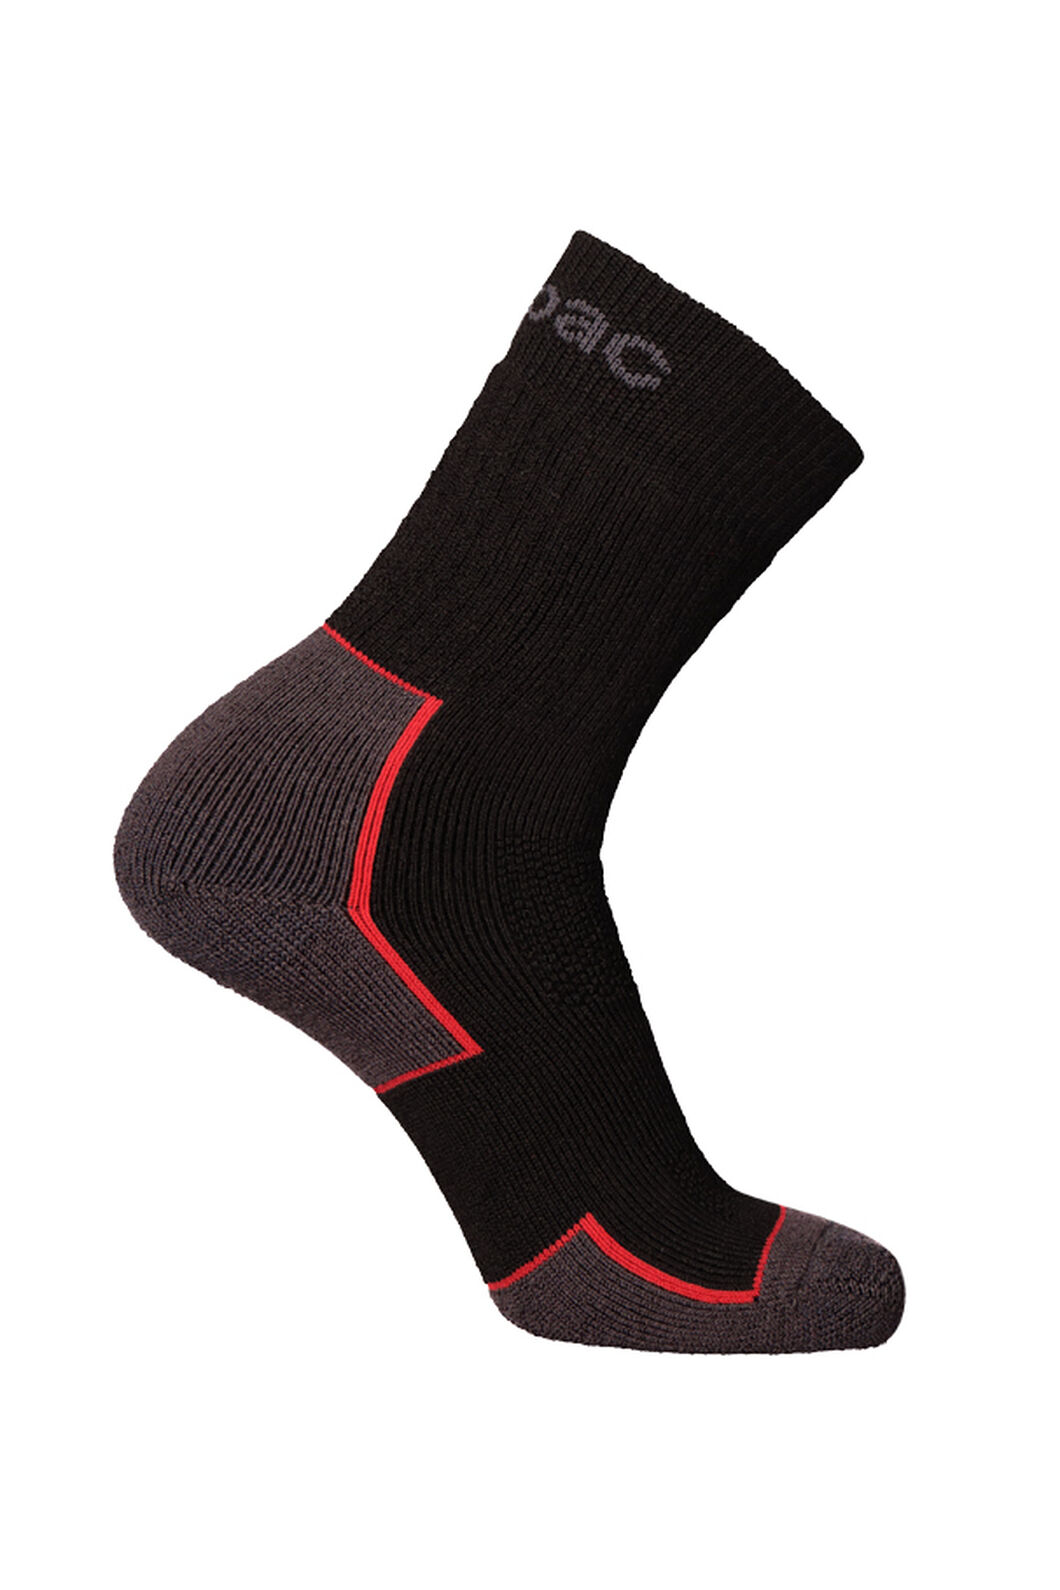 Macpac Merino Blend Hiker Socks | Macpac